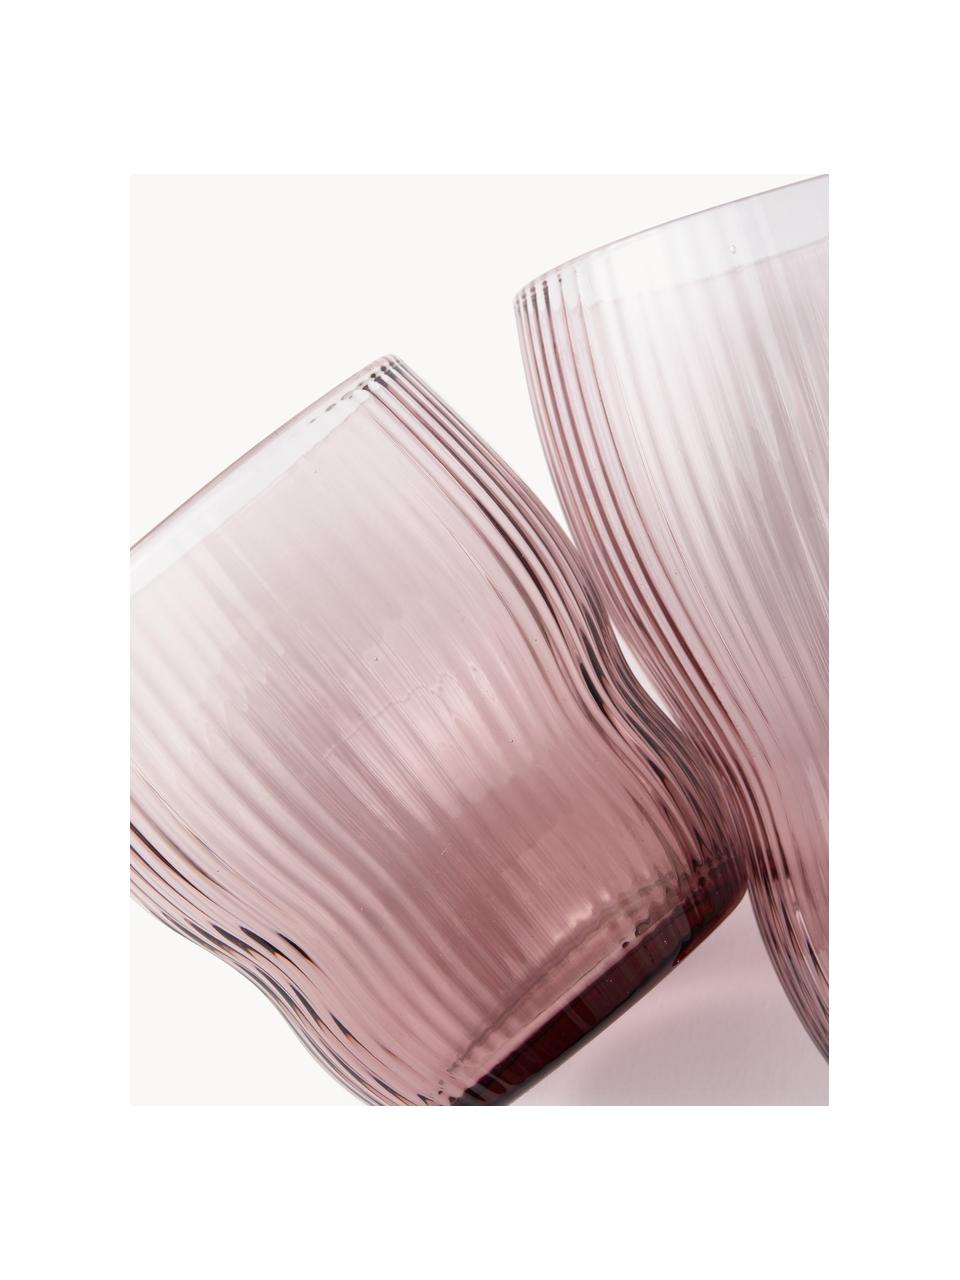 Ručně foukané sklenice s rýhovanou strukturou Pum, 2 ks, Foukané sklo, Starorůžová, Ø 8 cm, V 9 cm, 200 ml